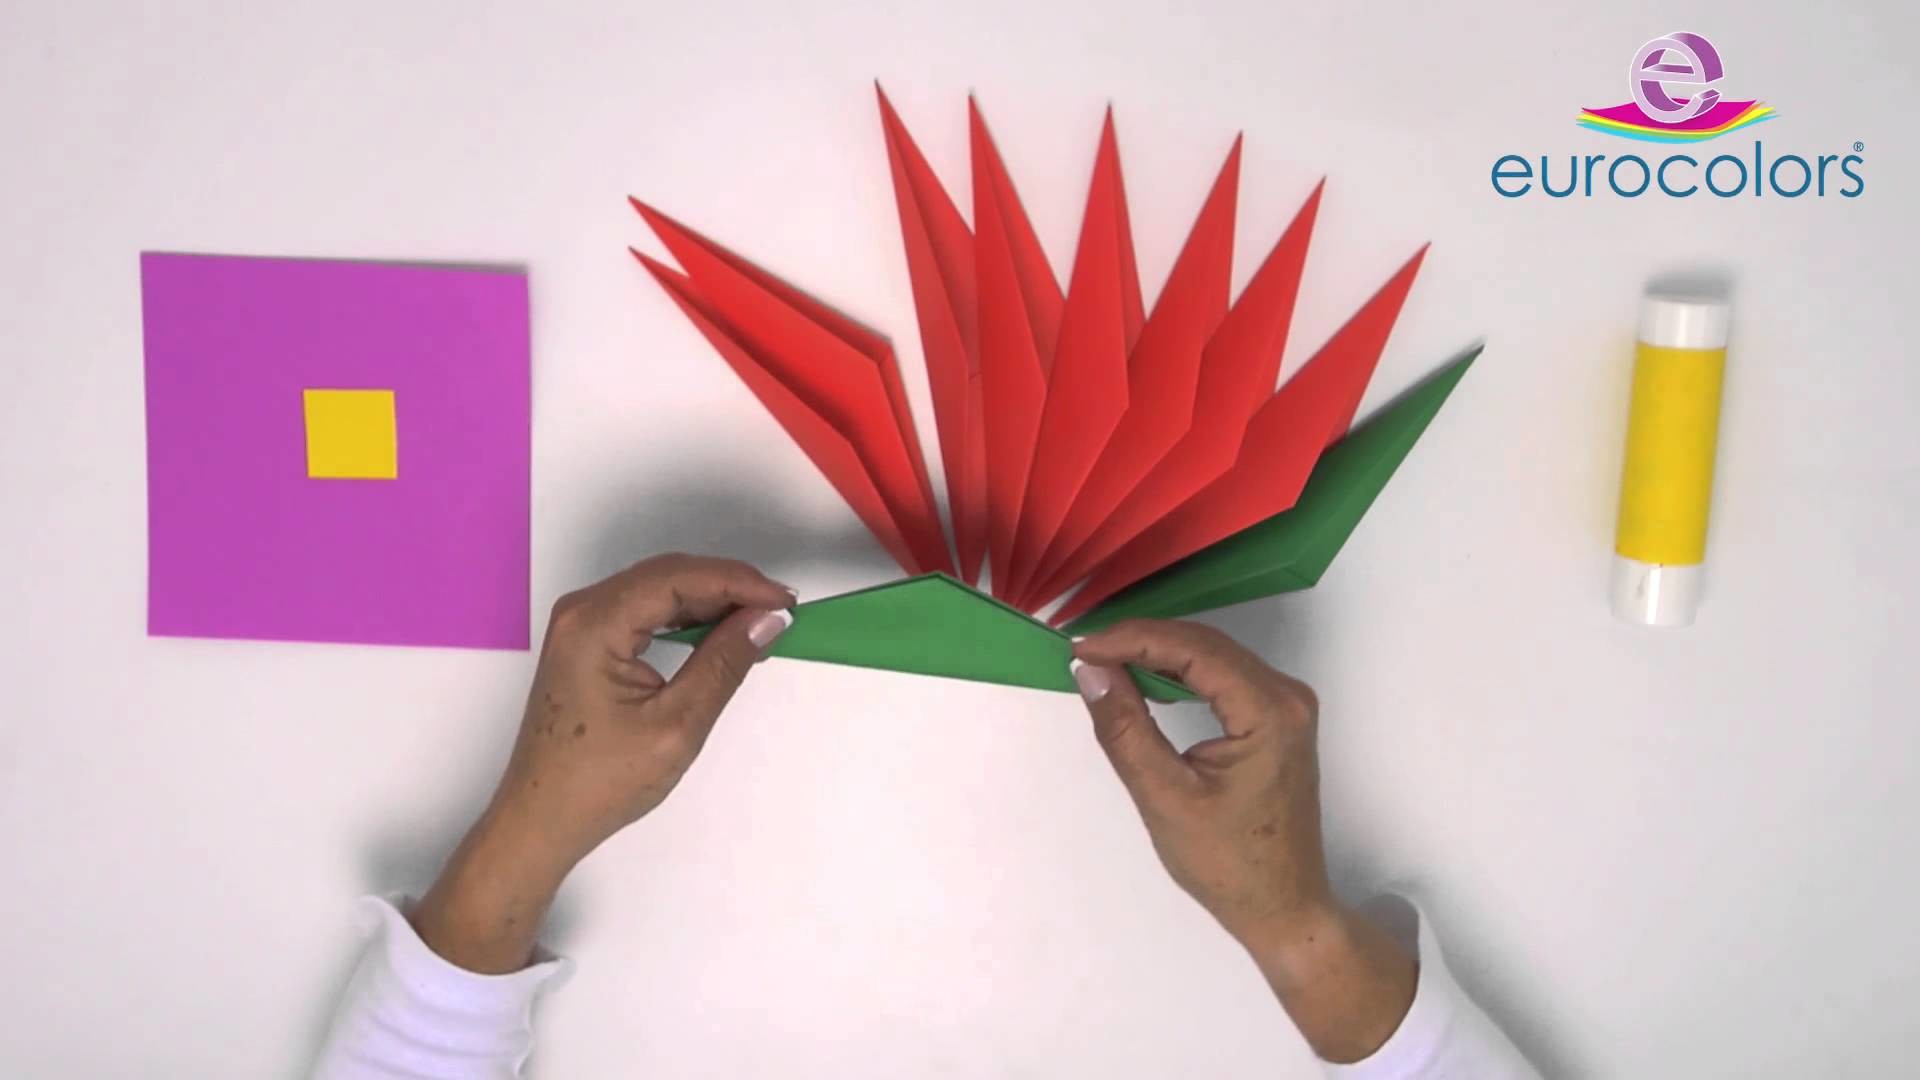 Arte con papel - Videocápsula 1 - Nochebuena origami